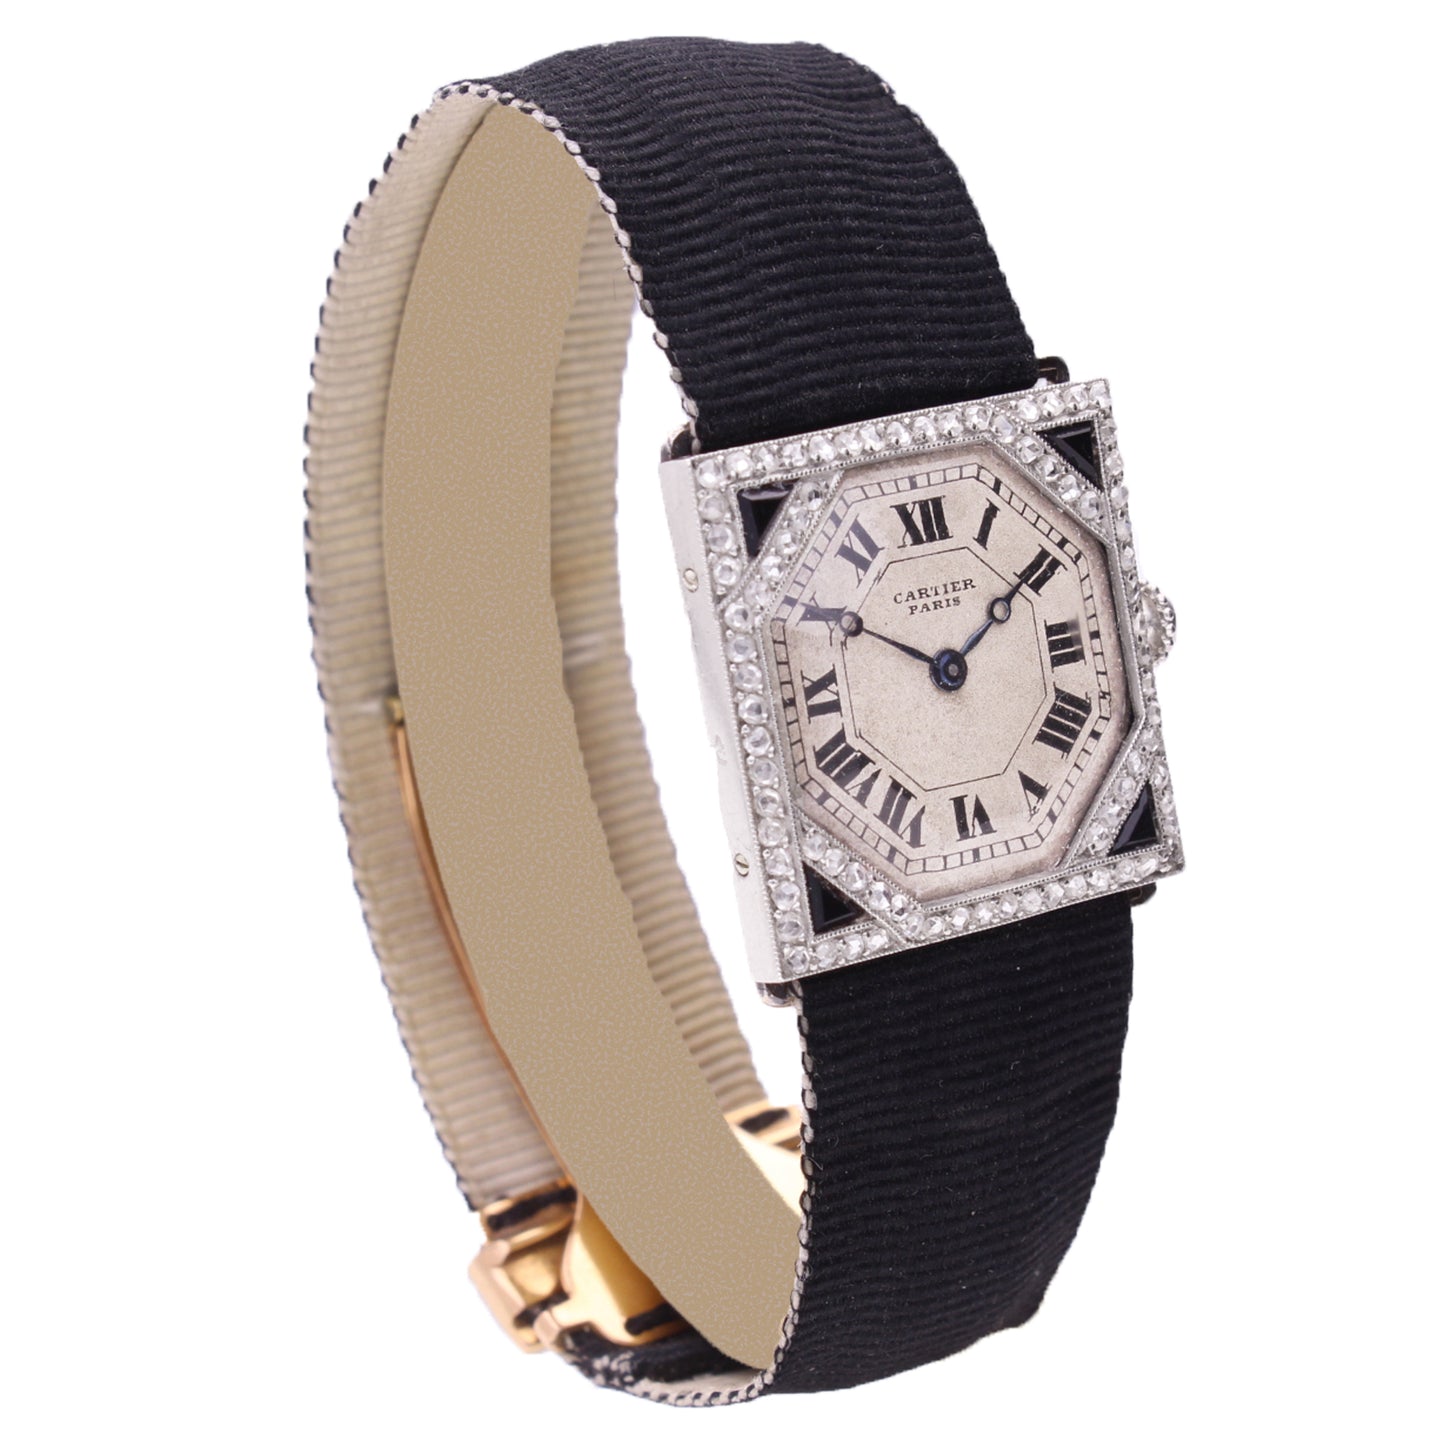 Platinum and diamond wristwatch. Made 1920